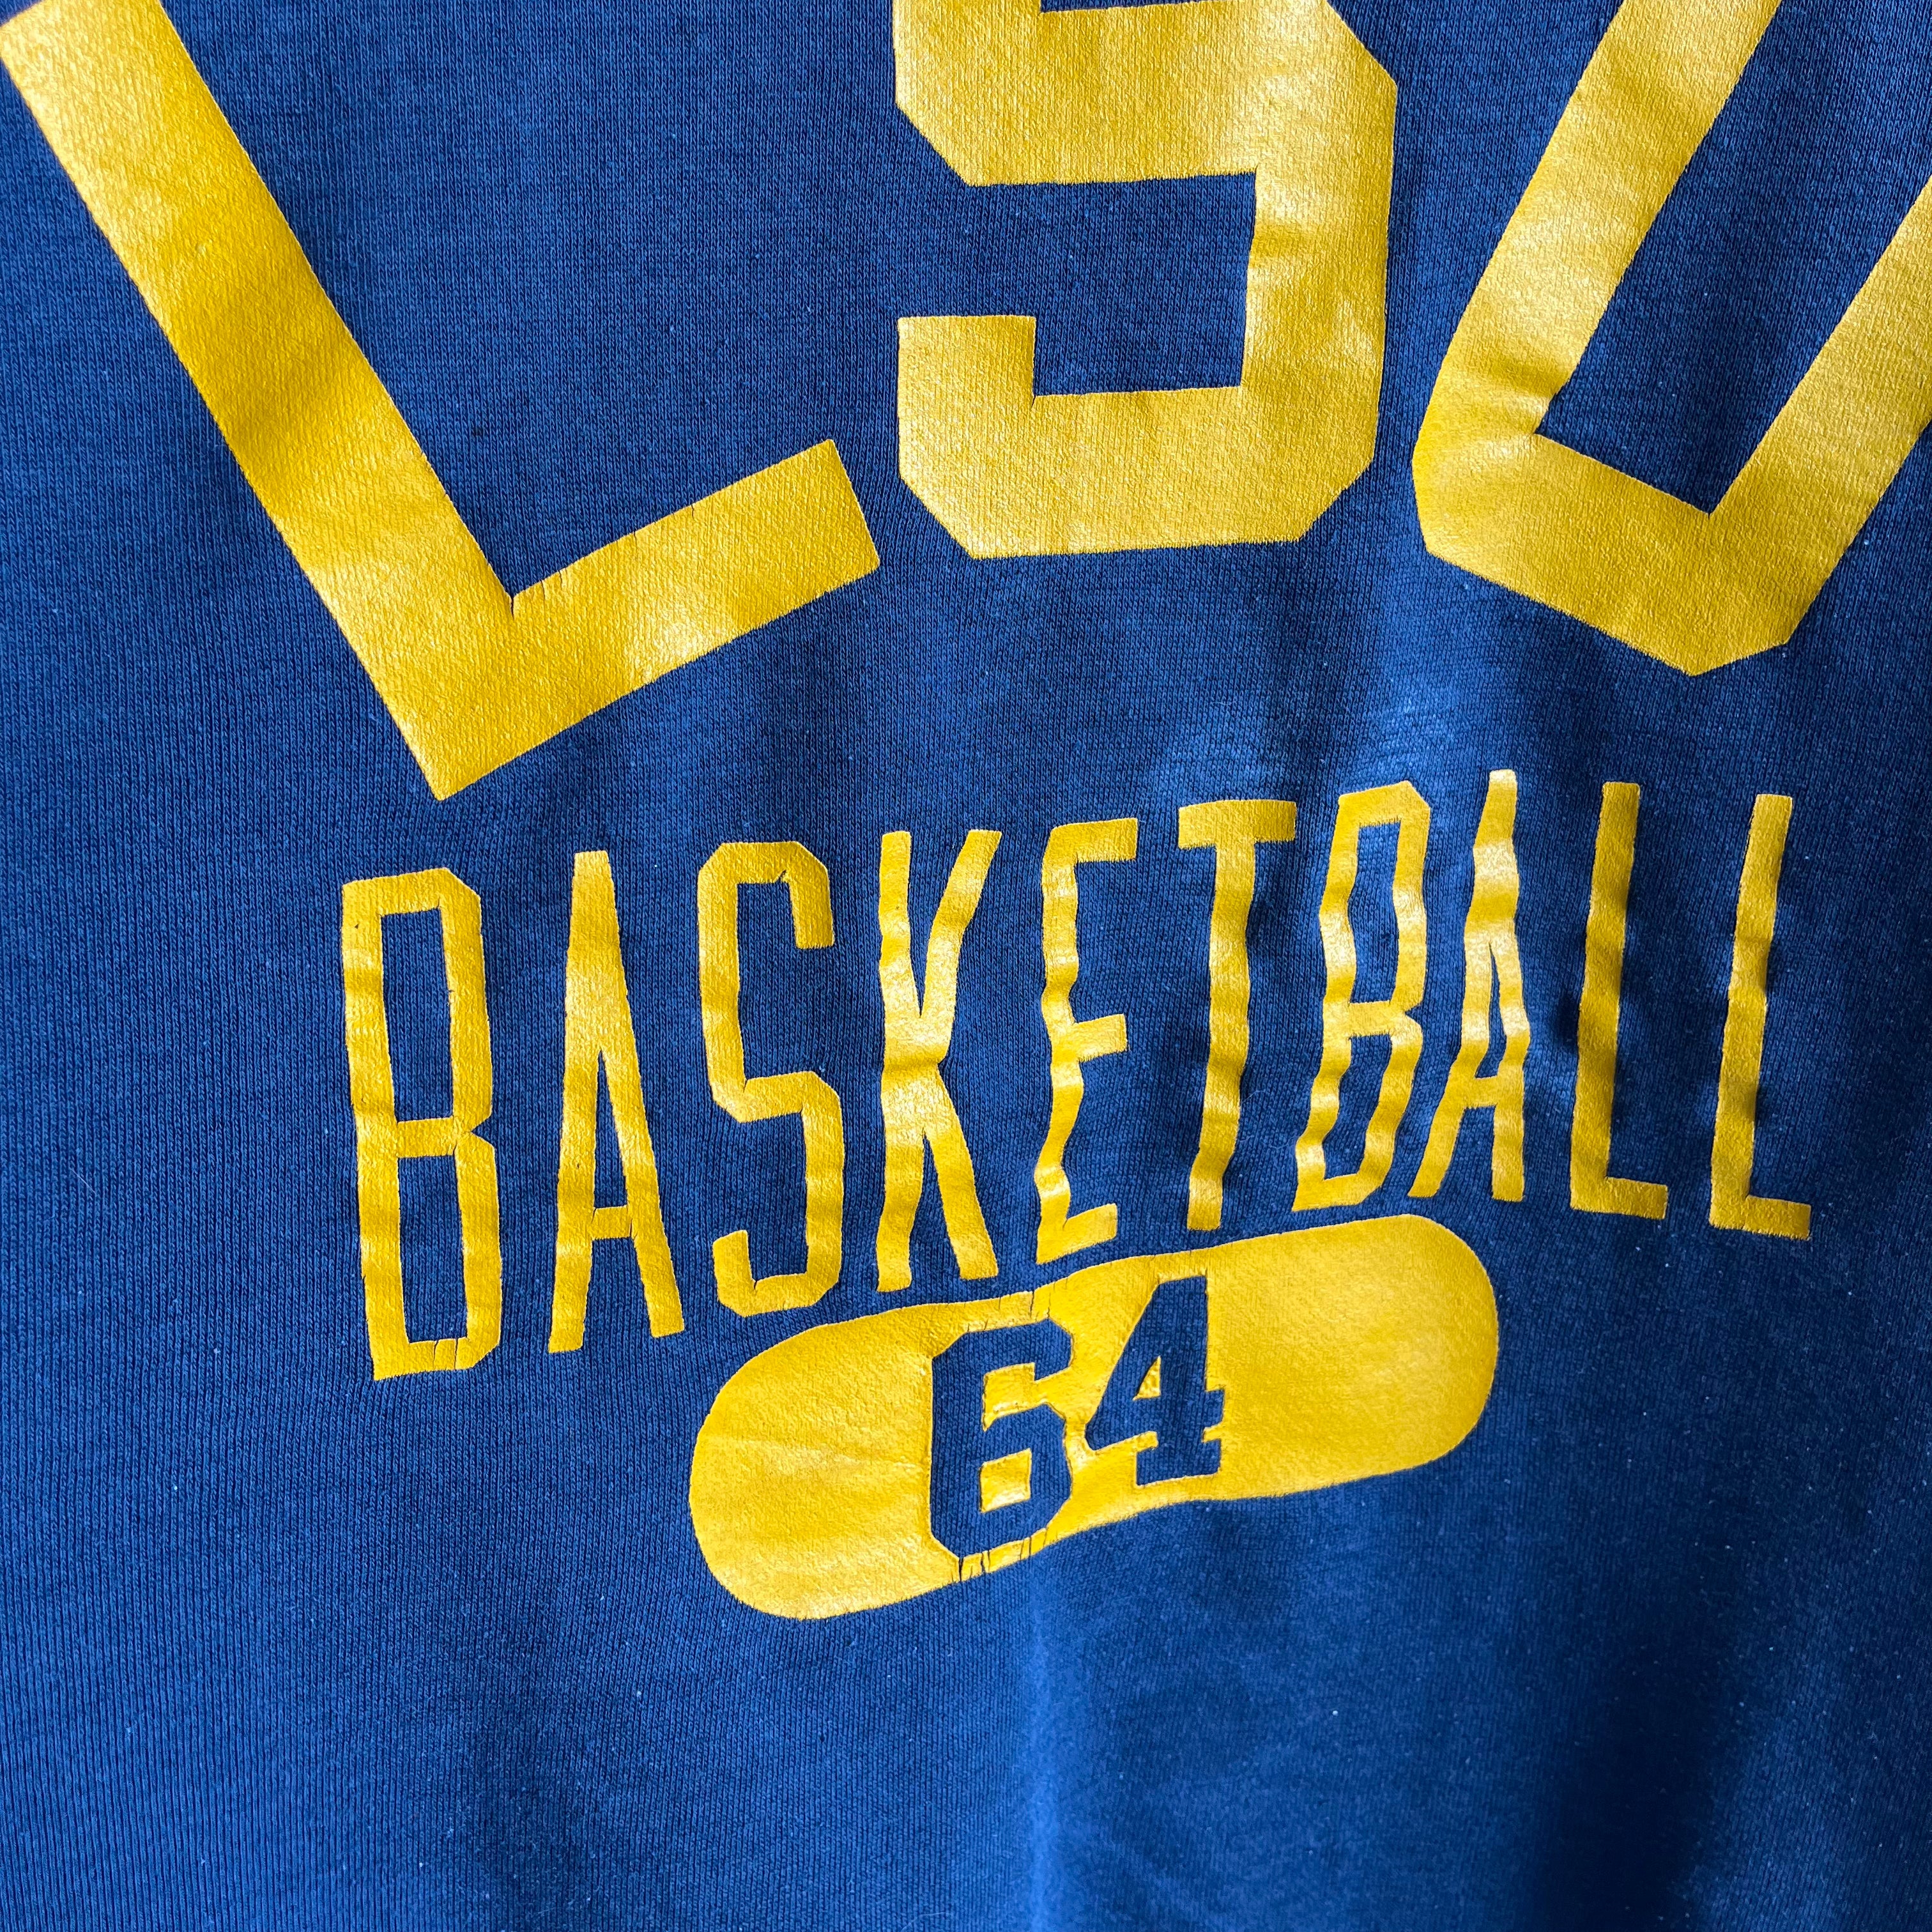 1980/90s LSU Basketball Warm Up - WOW